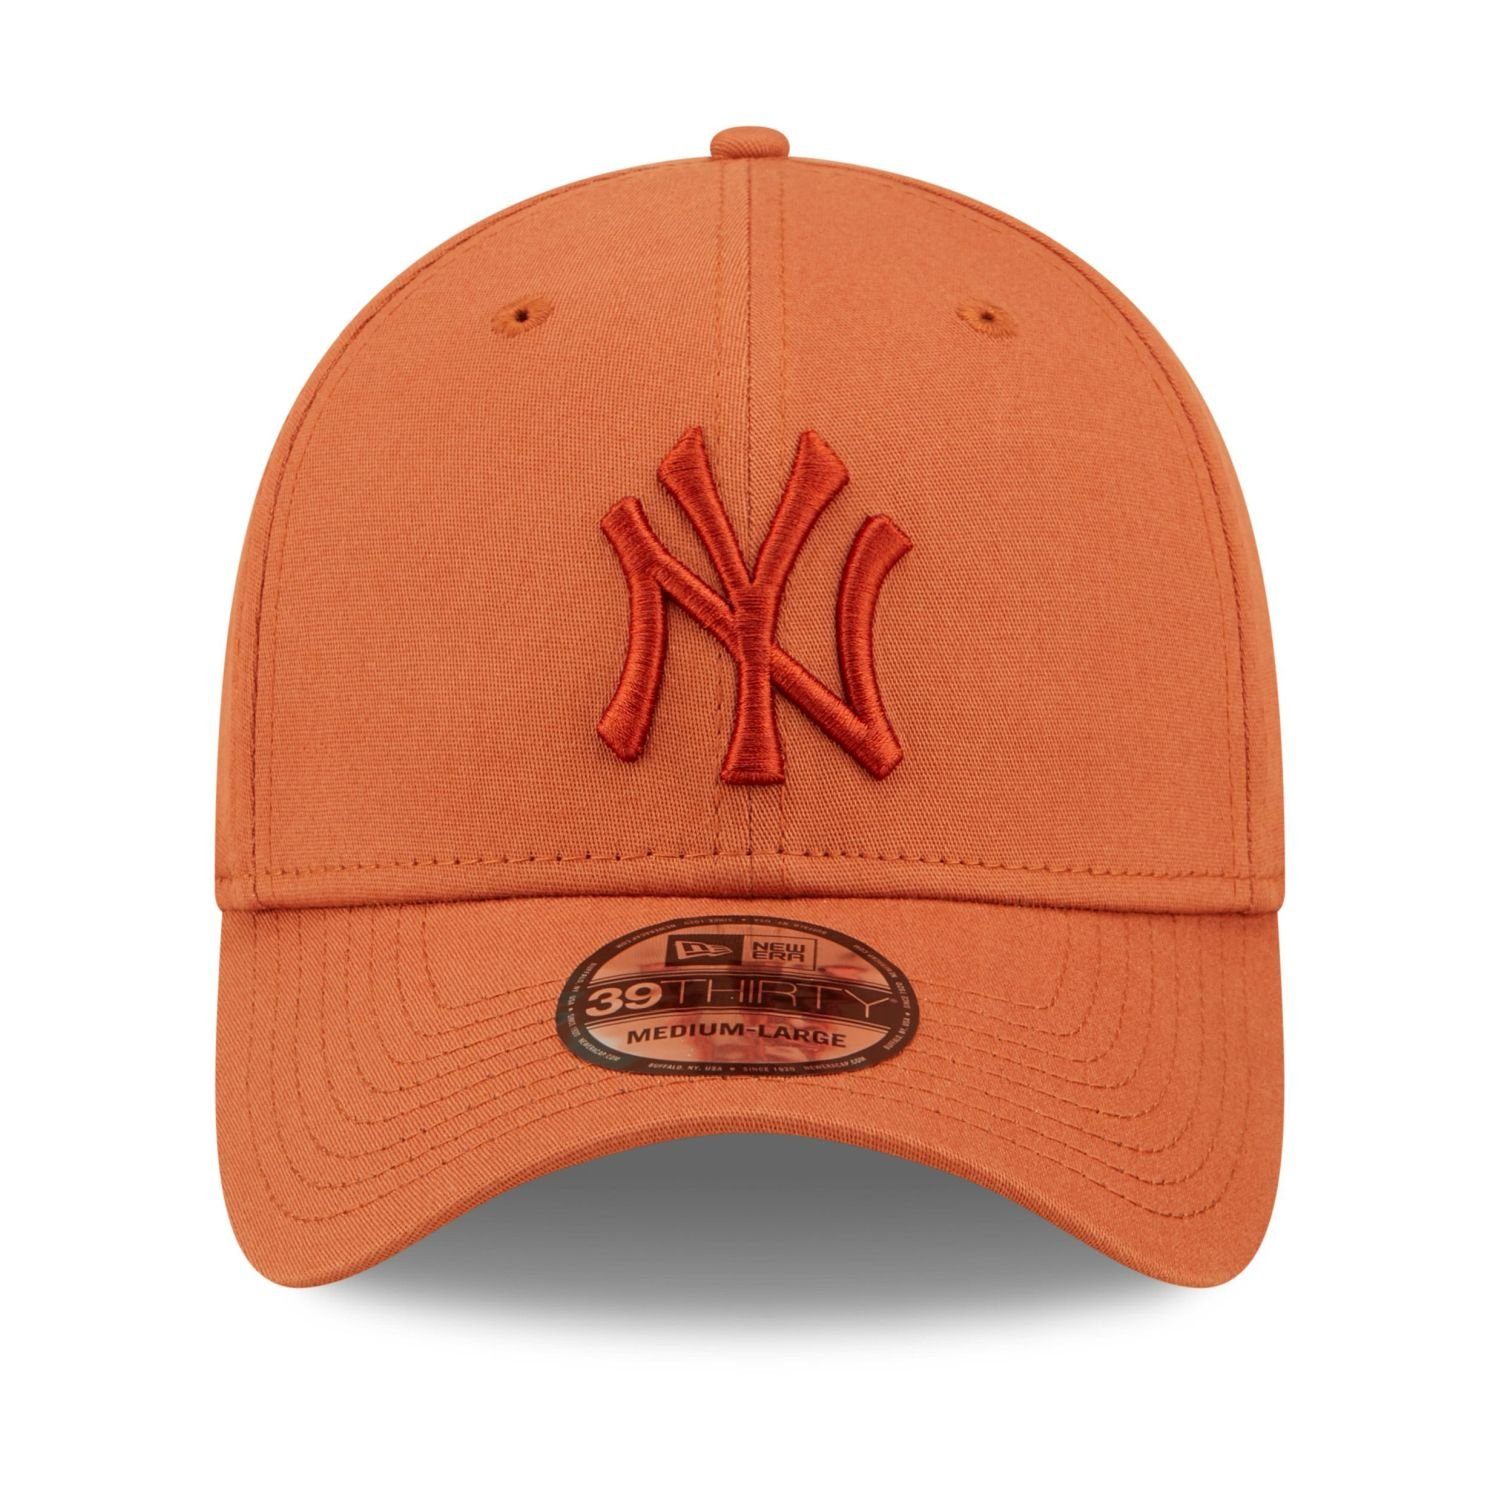 New Era Flex York Cap Stretch New orange 39Thirty Yankees